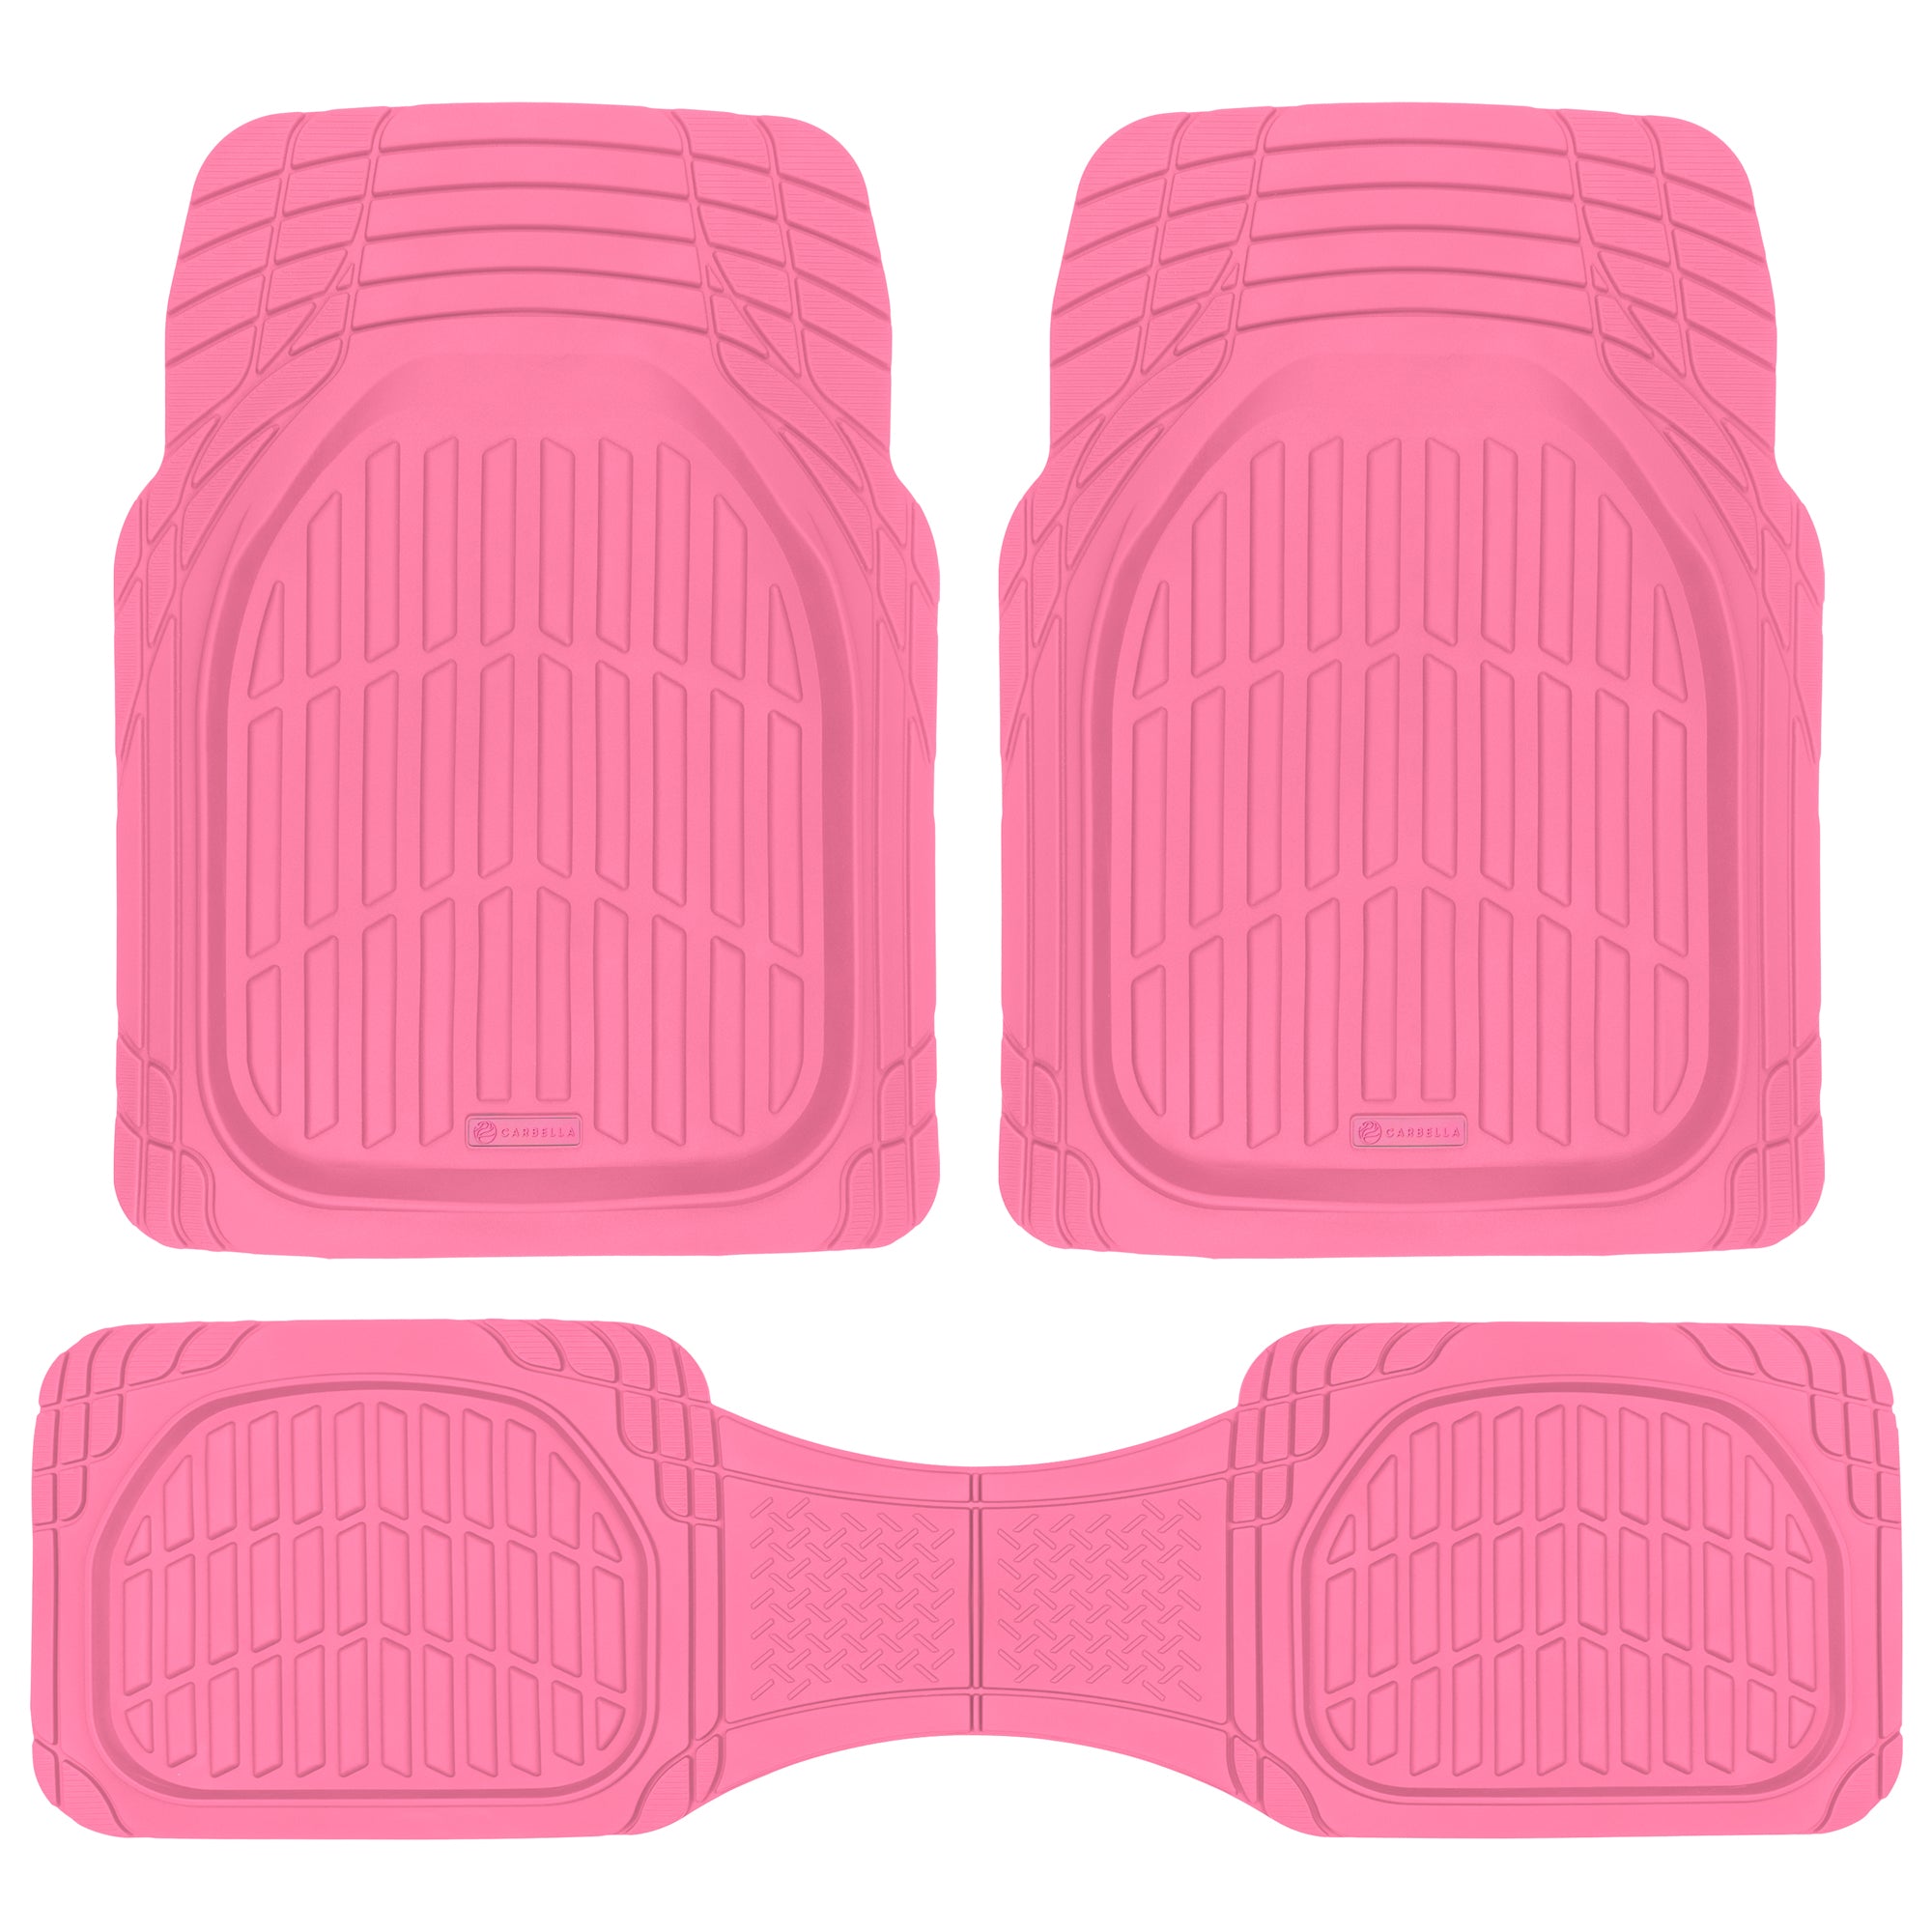 Carbella Pink Car Mats, 3 Piece Full Set Waterproof Trim-to-Fit Pink Floor Mats for Cars Trucks Suv, Deep Dish All-Weather Pink Car Floor Mats